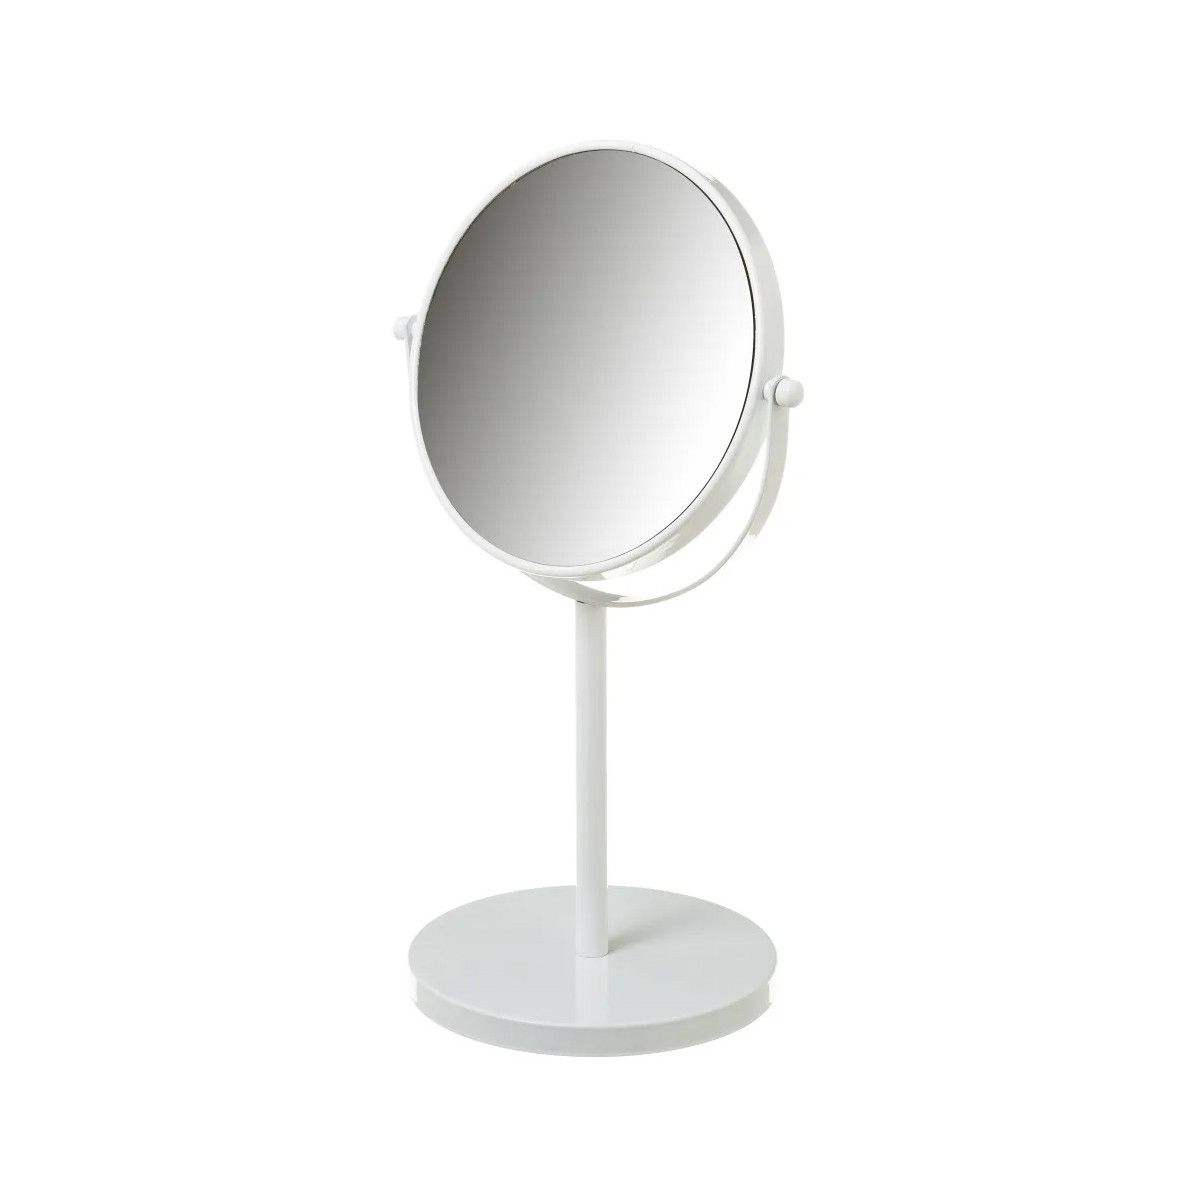 Miroir grossissant (x5) double face en métal blanc